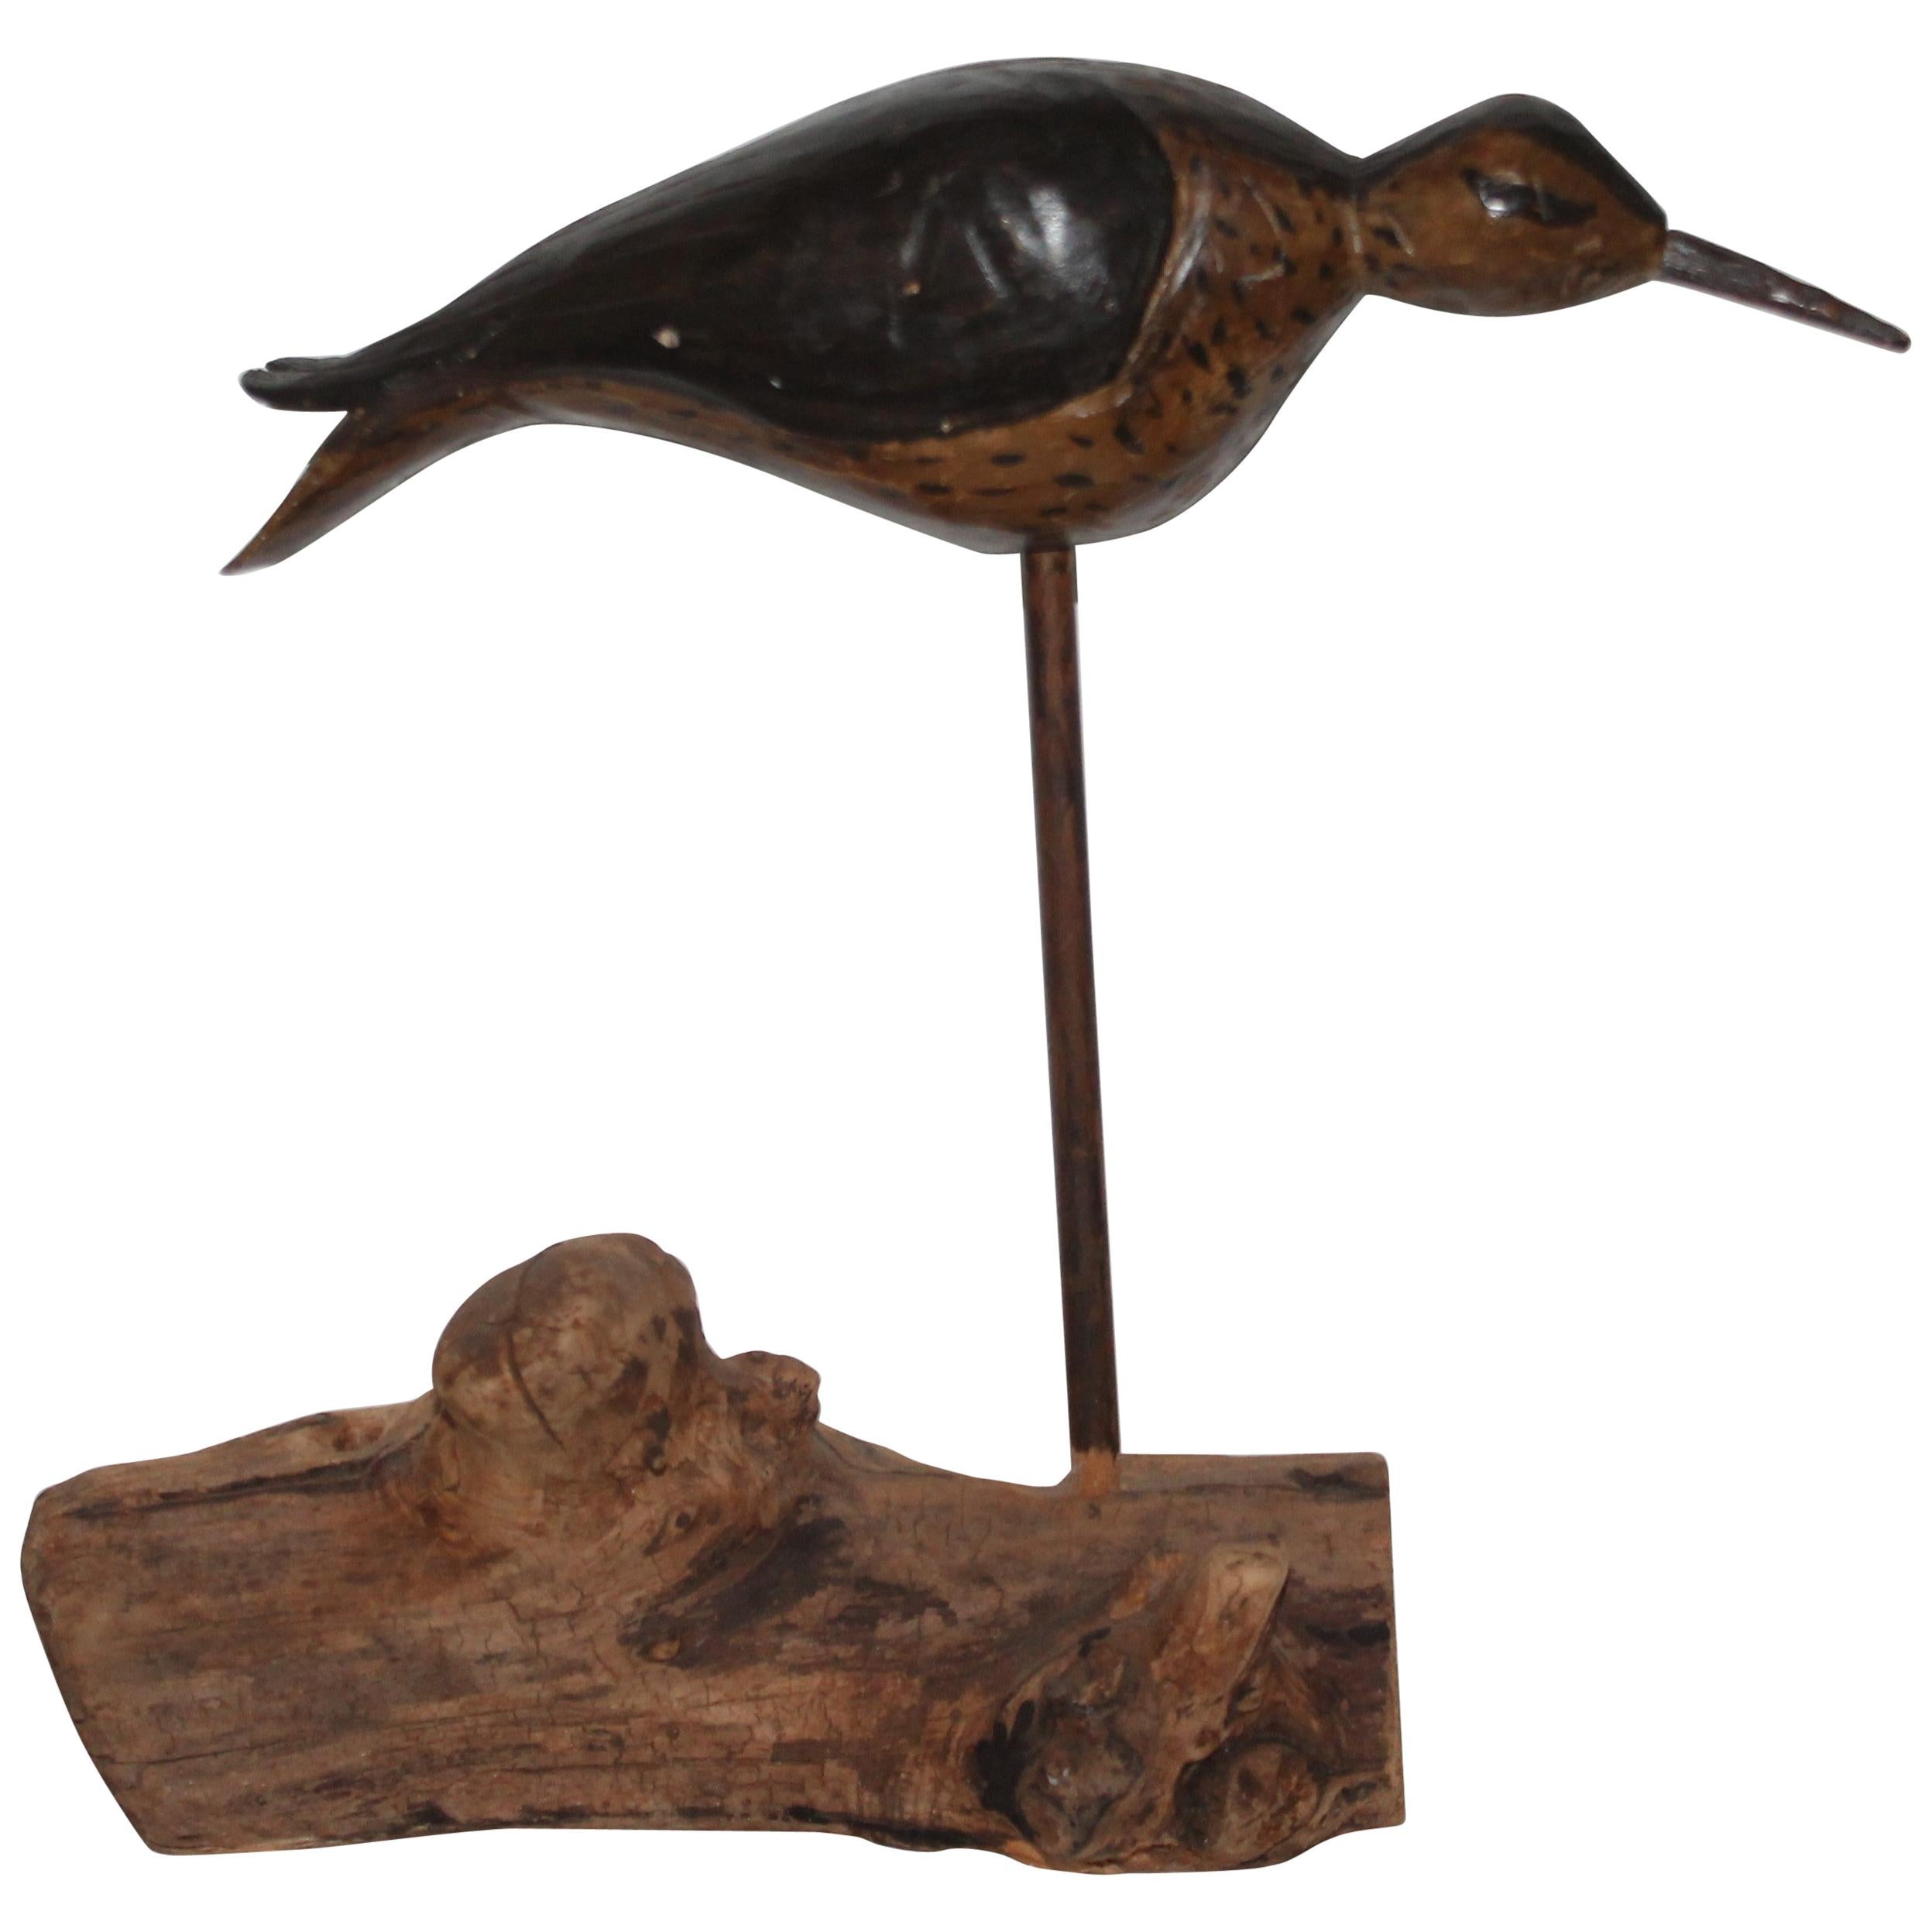 Details about   Hadn Carved Folk Art 2 Vintage Two Toned Wooden Shore Birds on Base 6.5"L & 9"L 